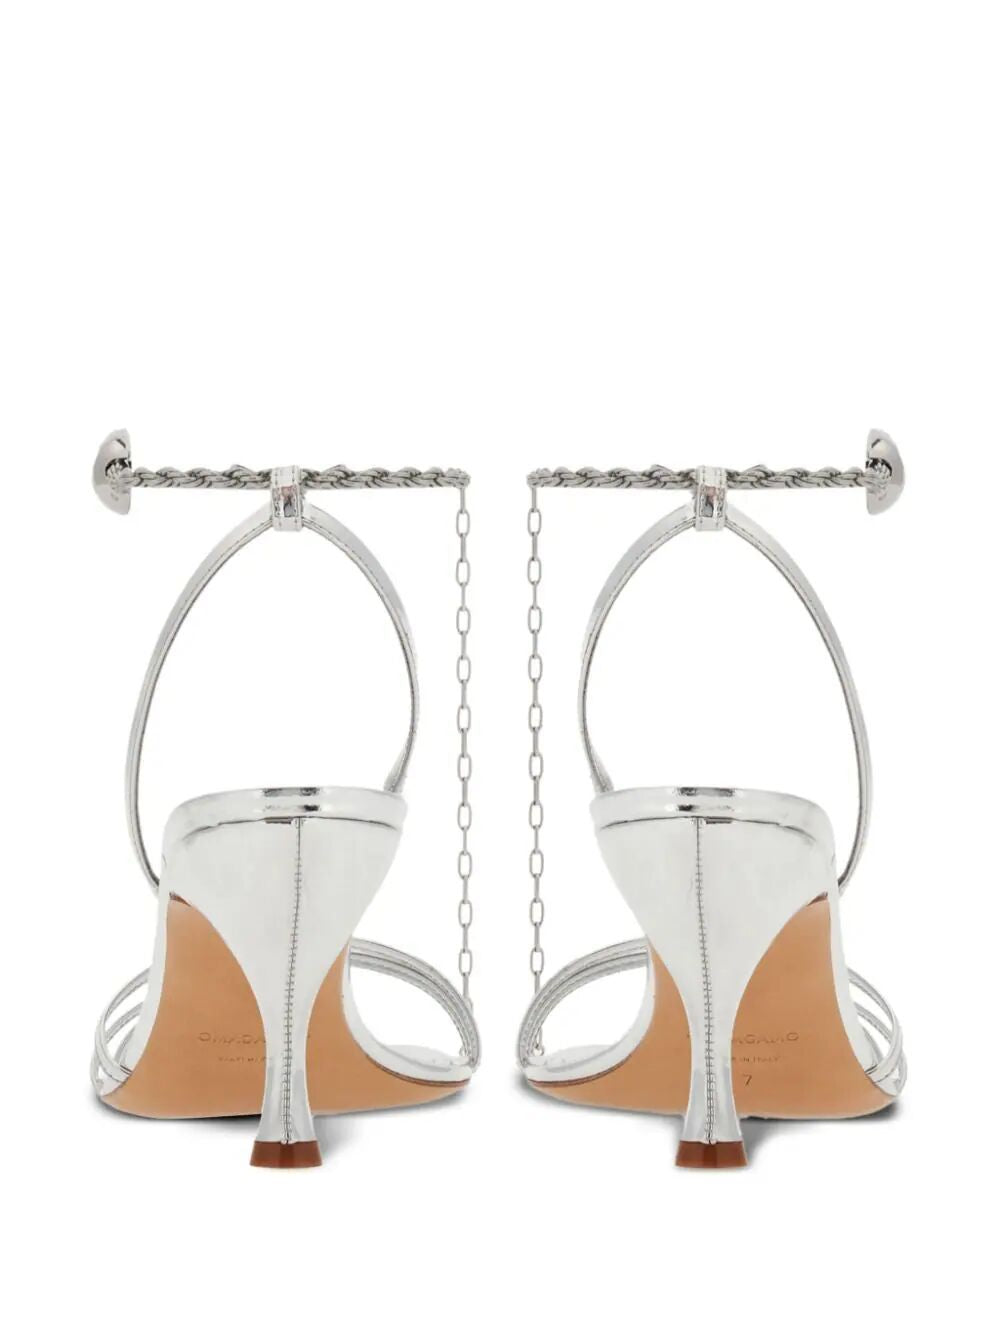 Stunning Metallic Chain Sandals for Women